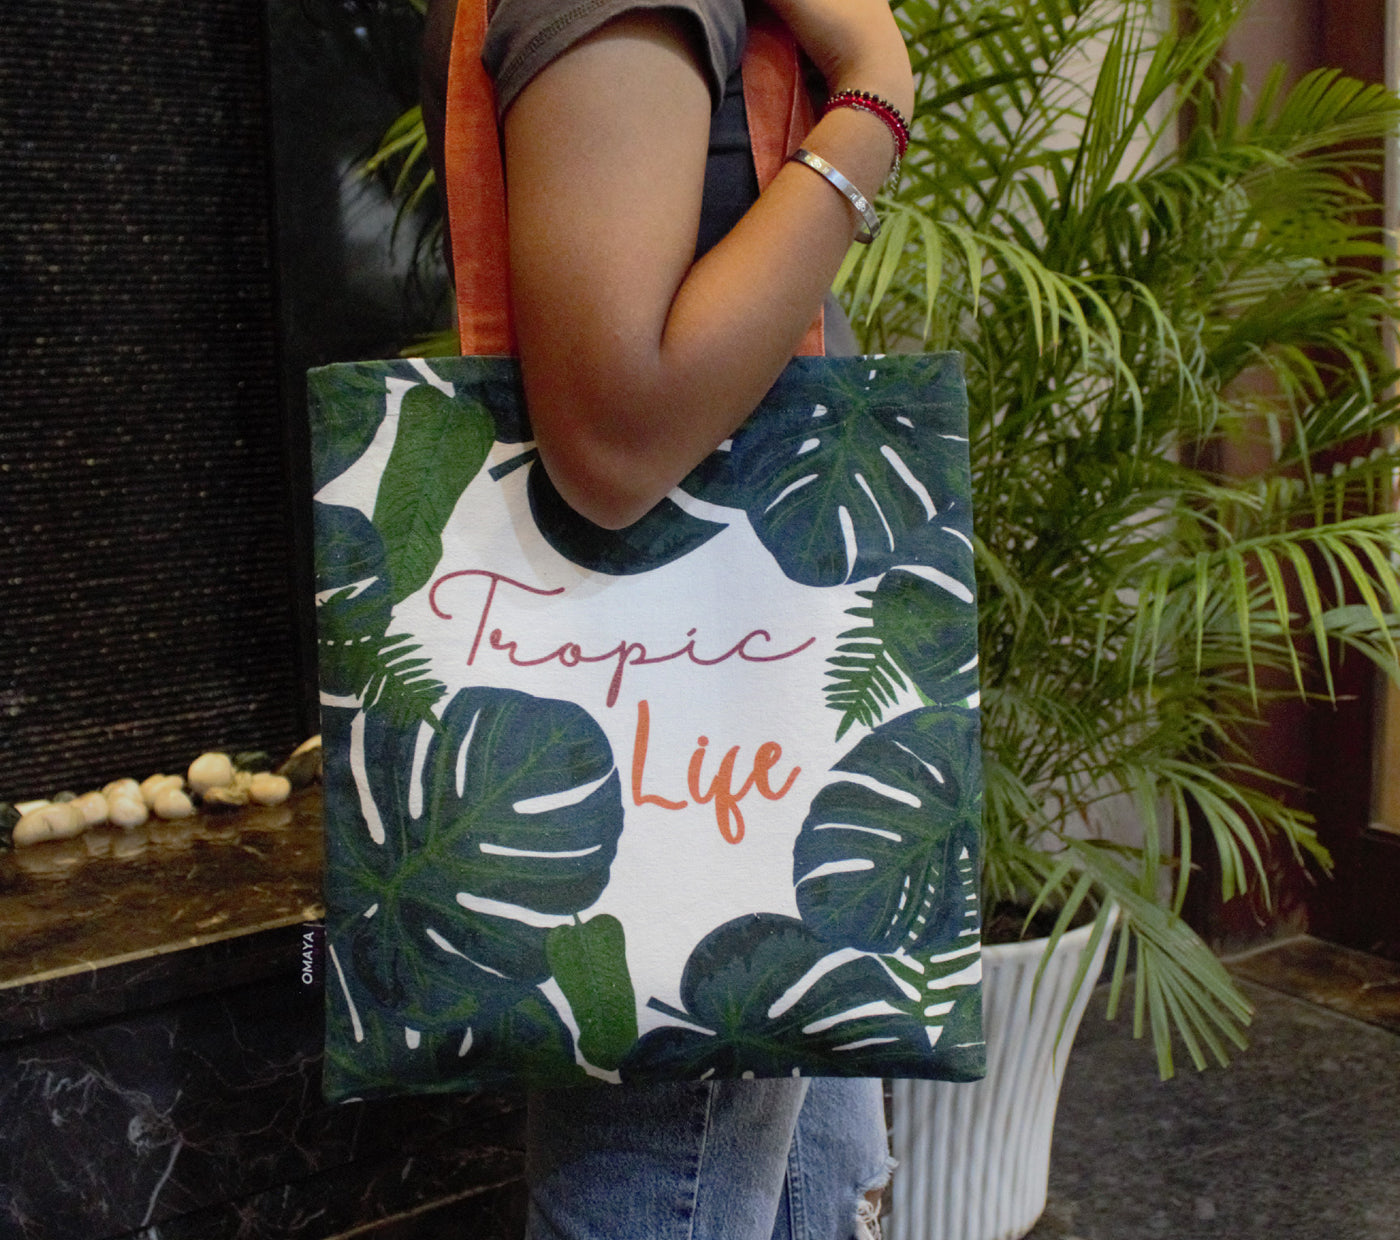 Tropic Life Printed Canvas Tote Bag 34x36 cm.